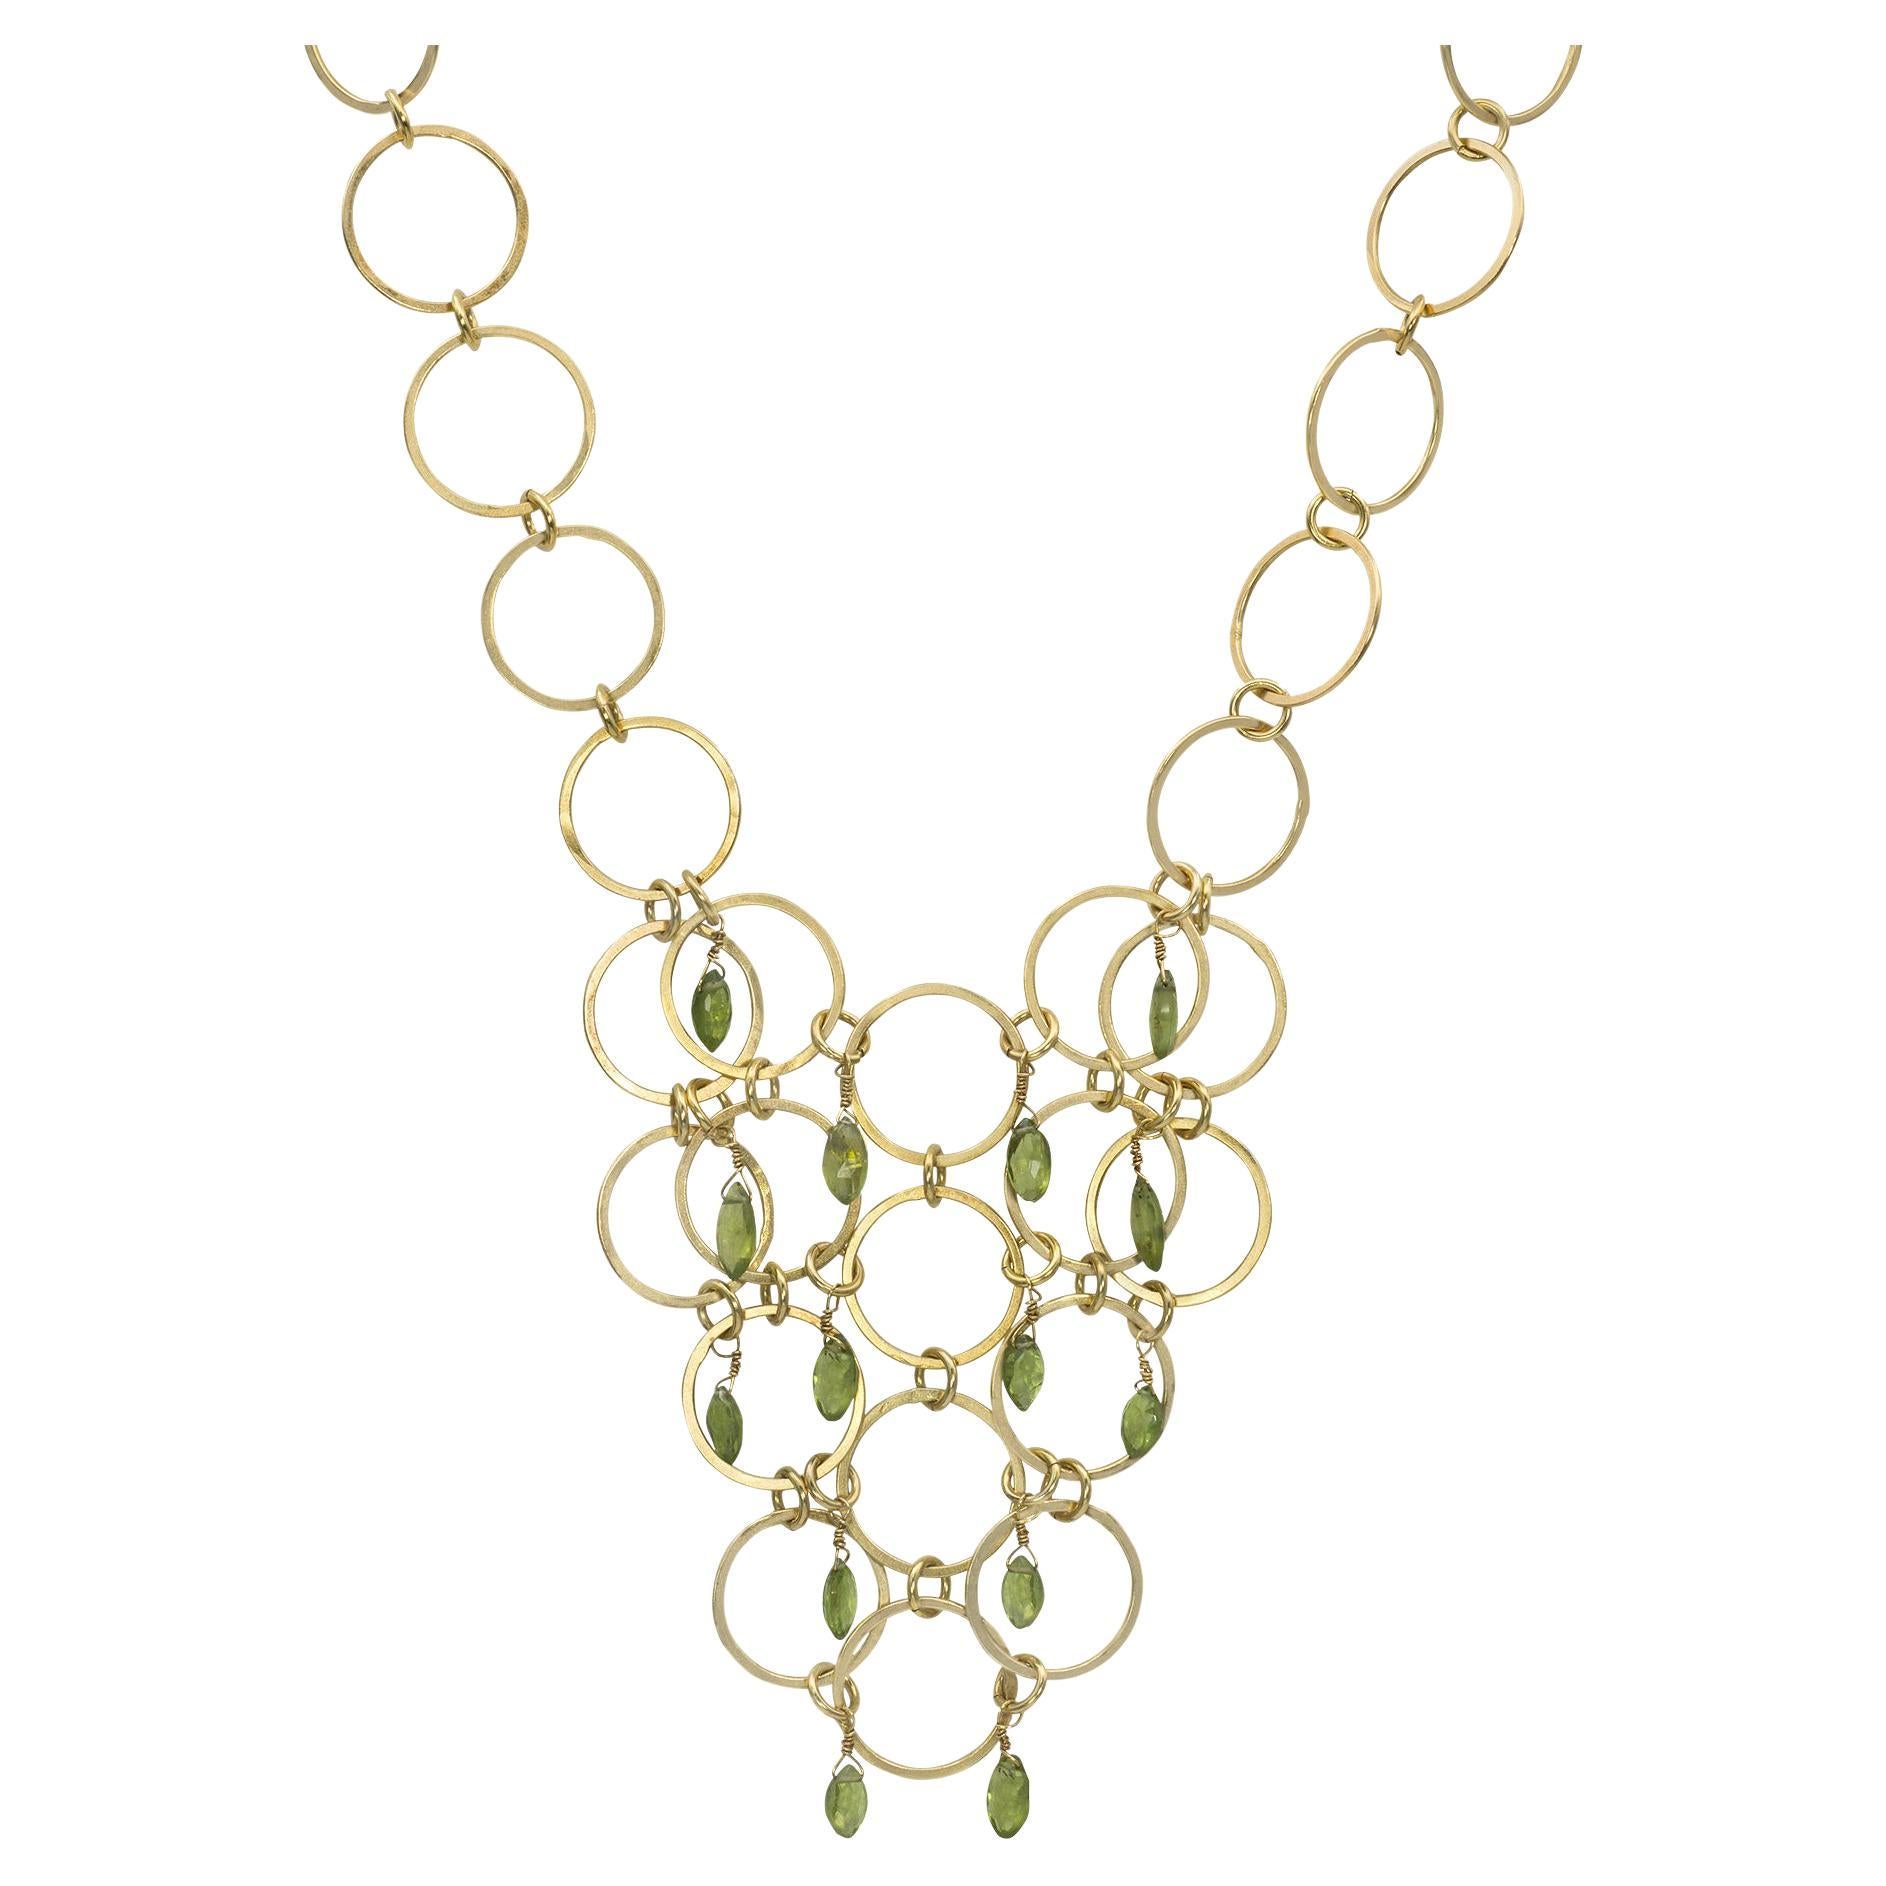 18k Gold Vermeil multi Hoop Bib Necklace with Peridot Stones